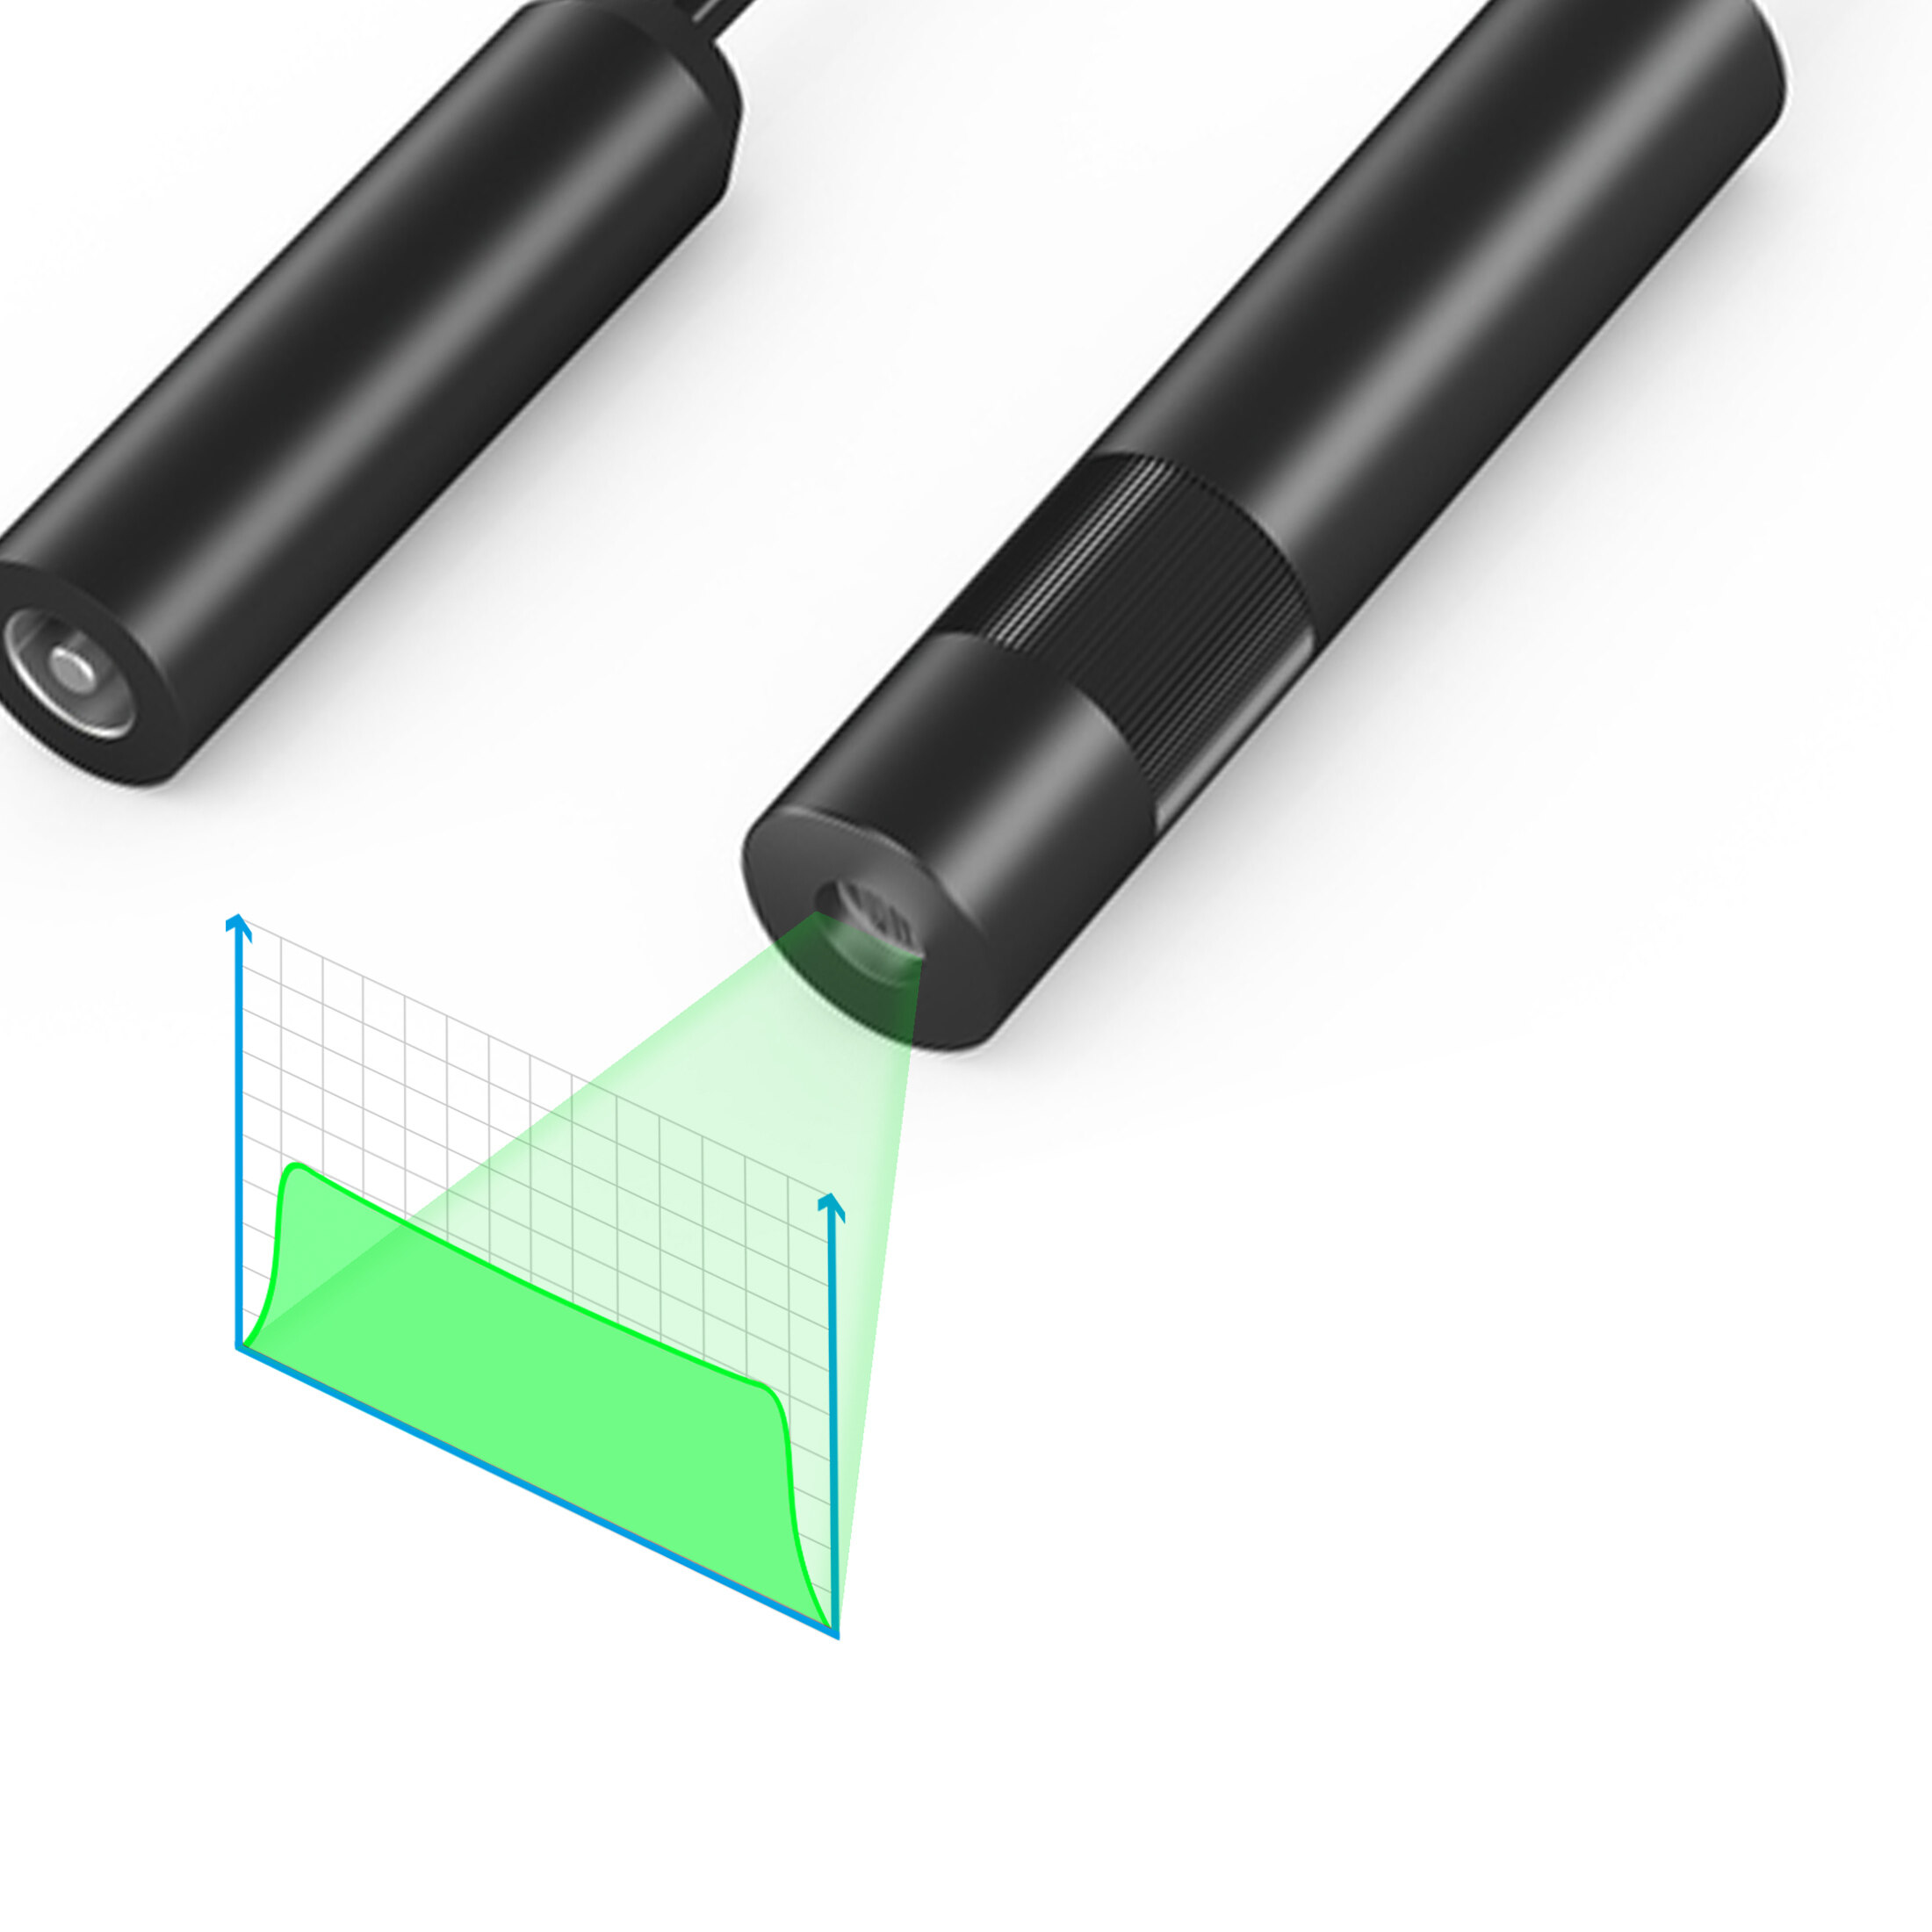 Line laser, green, 520 nm, 110 °, 20 mW, 5 V DC, Ø20x90 mm, Laser Class 2M, Focus adjustable, Cable…